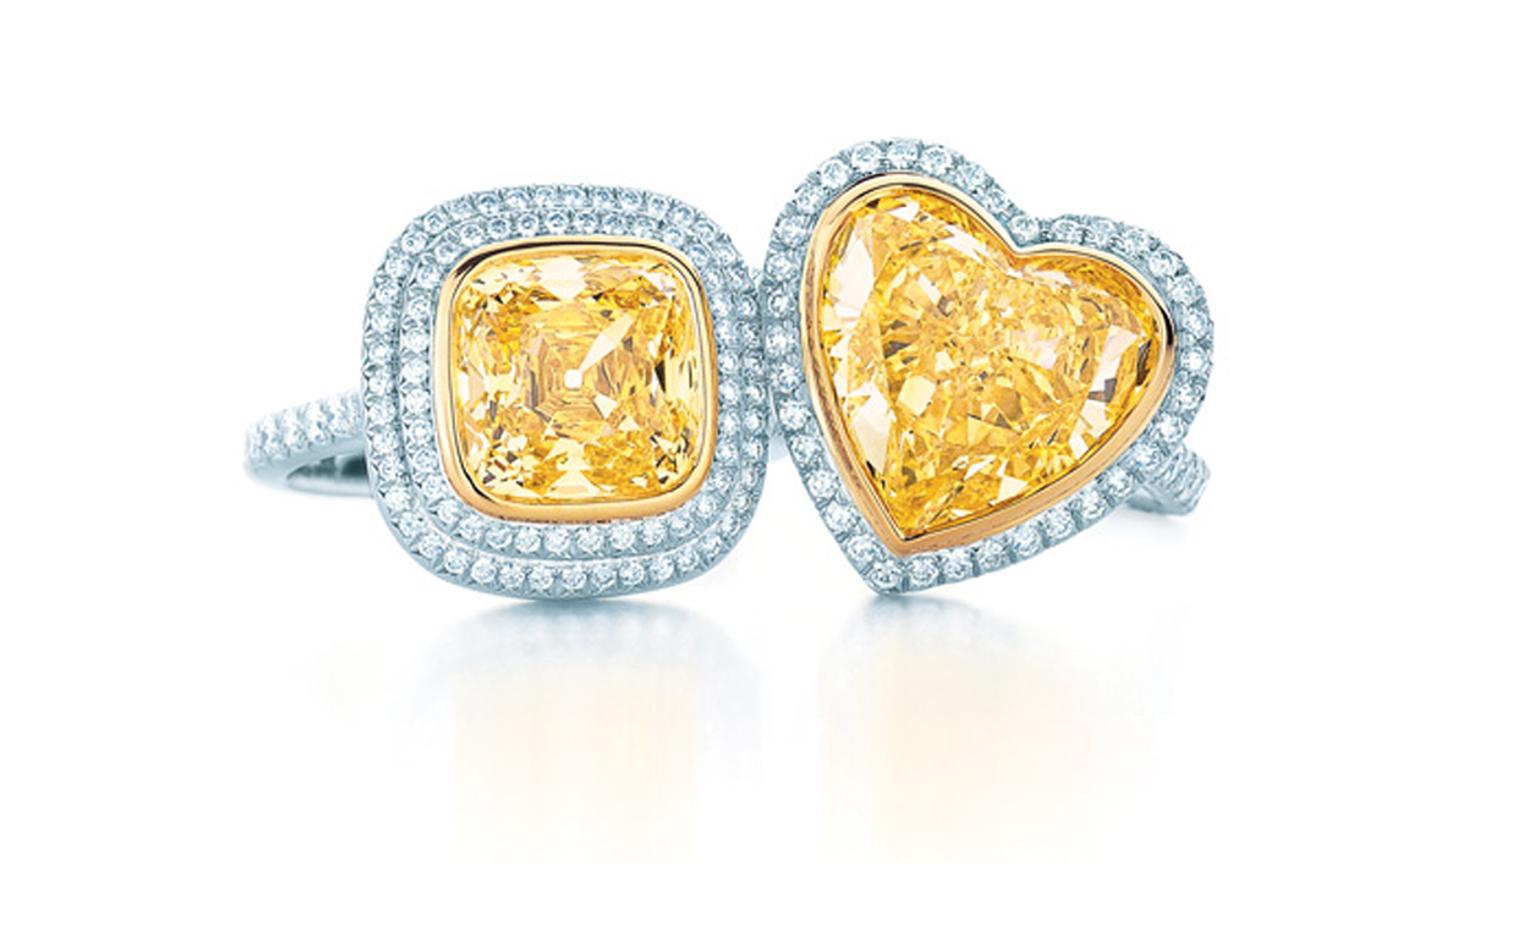 Tiffany & Co, yellow and white diamond rings. Square diamond £45,000 and heart shaped POA.